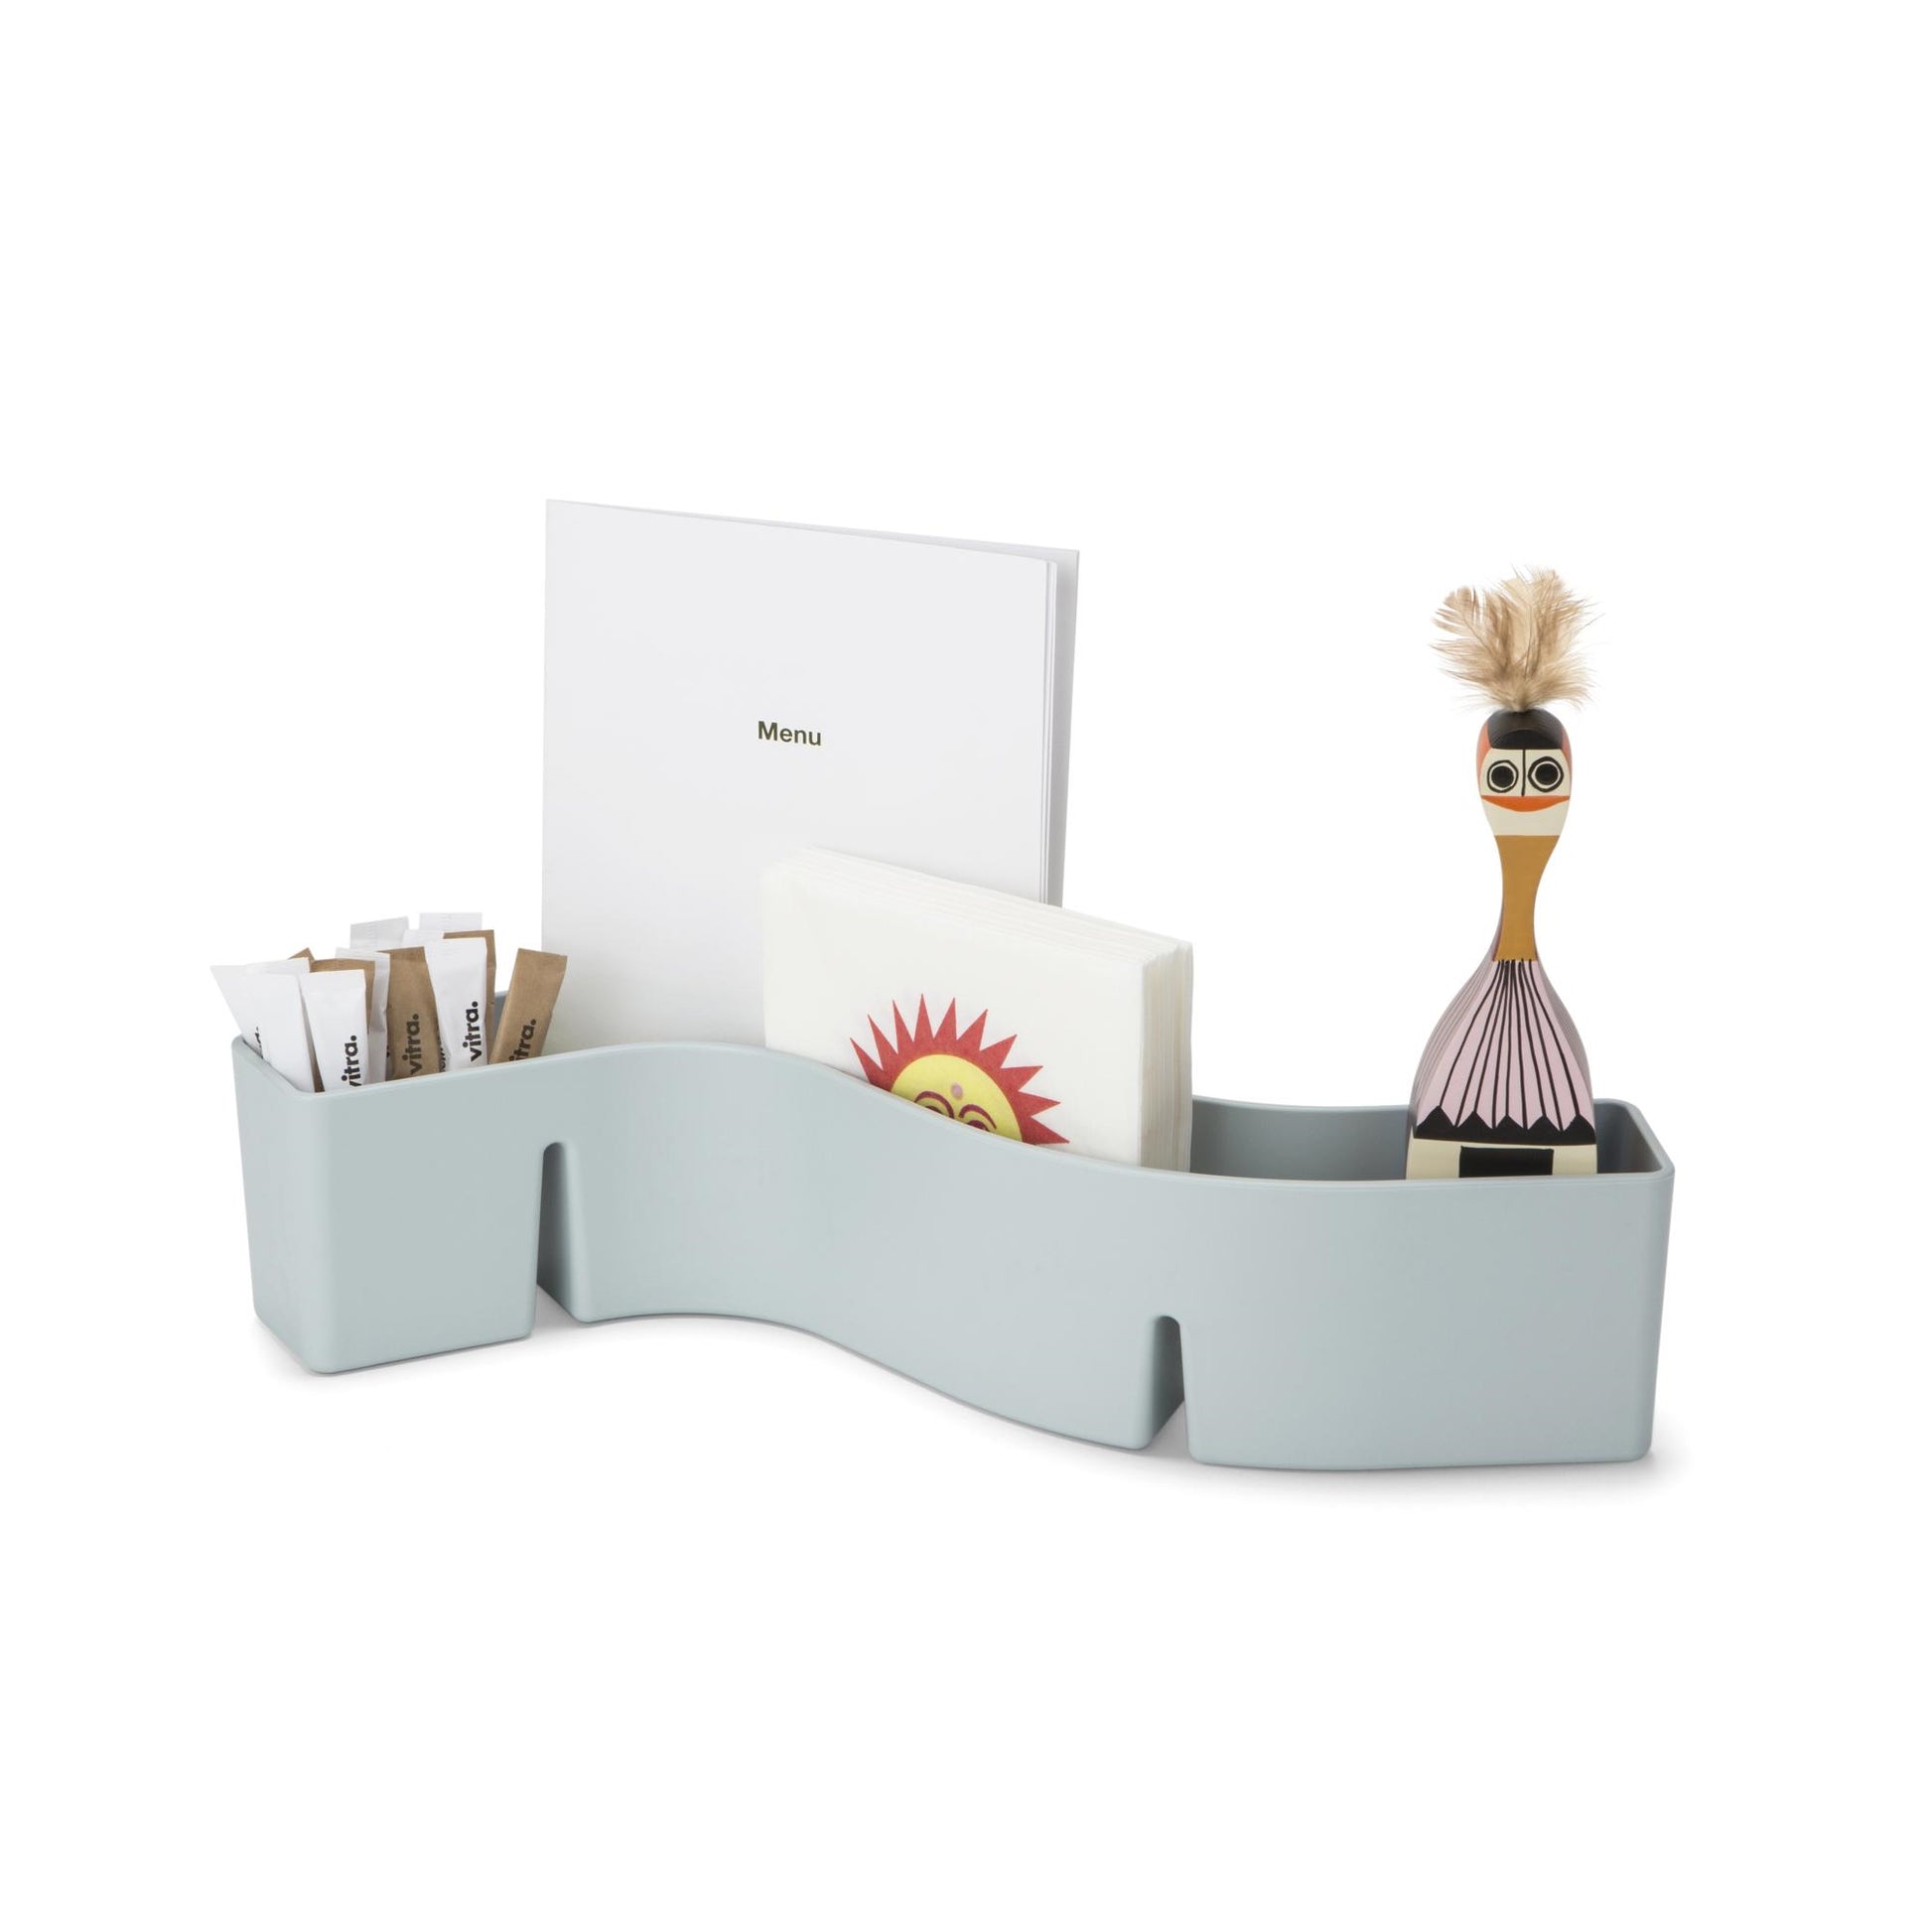 S-Tidy Desk Storage by Vitra #Sky Gray